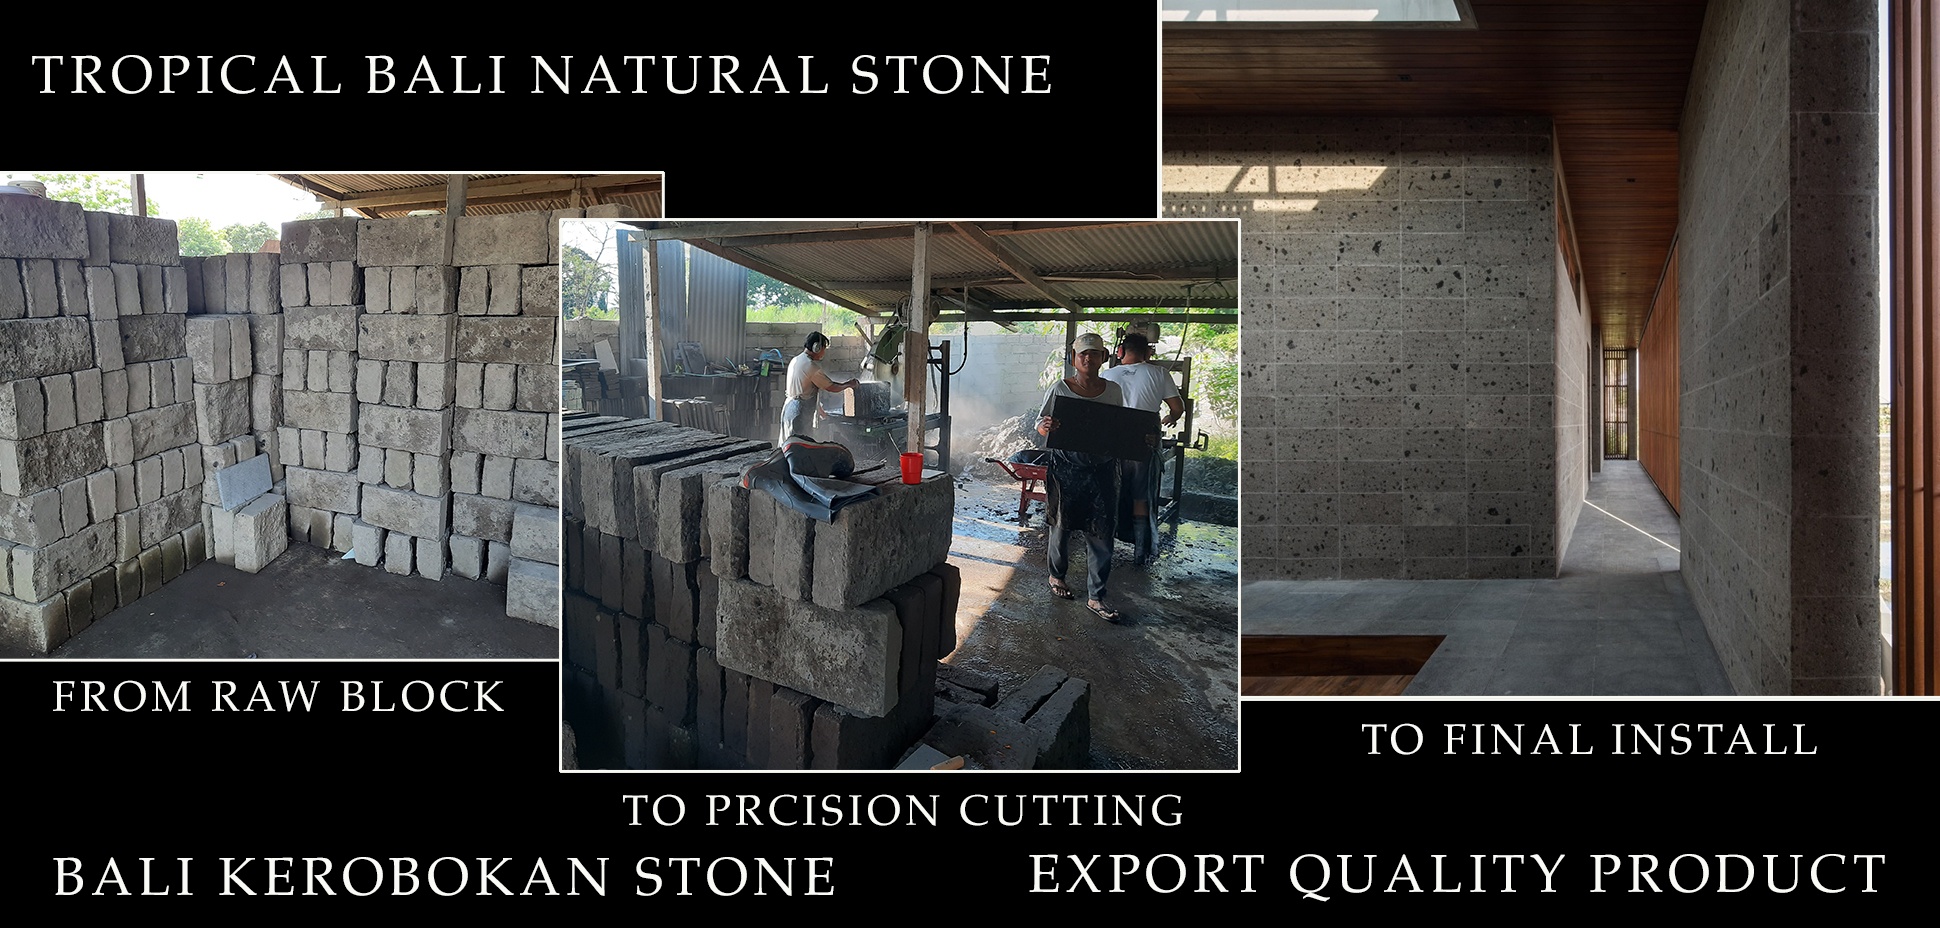 "Detailed craftsmanship evident in Bali Kerobokan stone masonry."